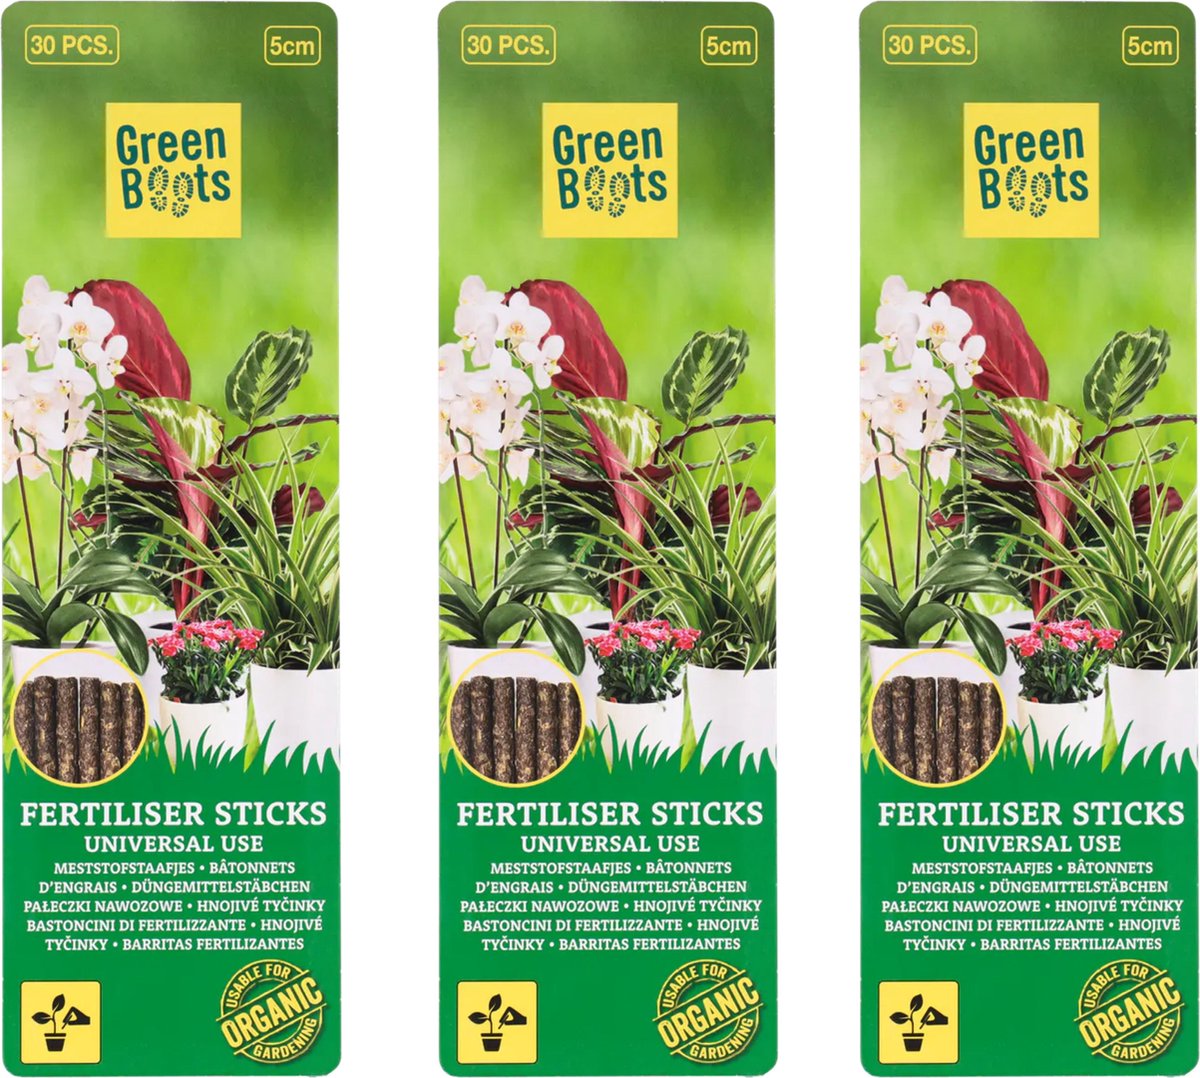 Fertiliser Sticks Universal Use Organic